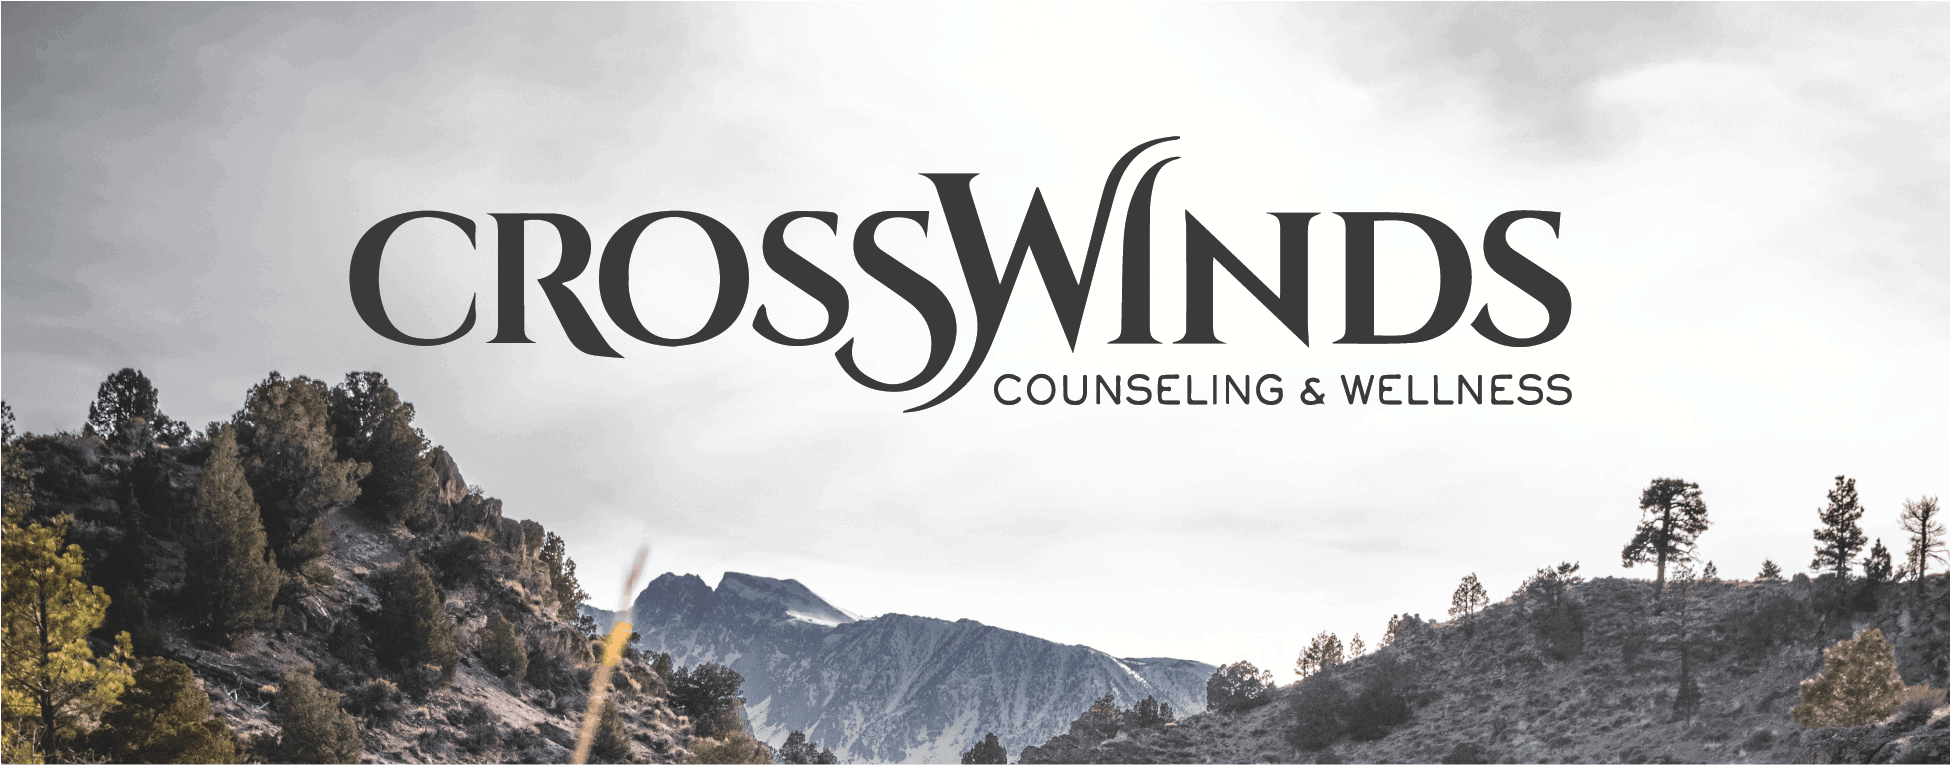 CrossWinds Webpage Concept